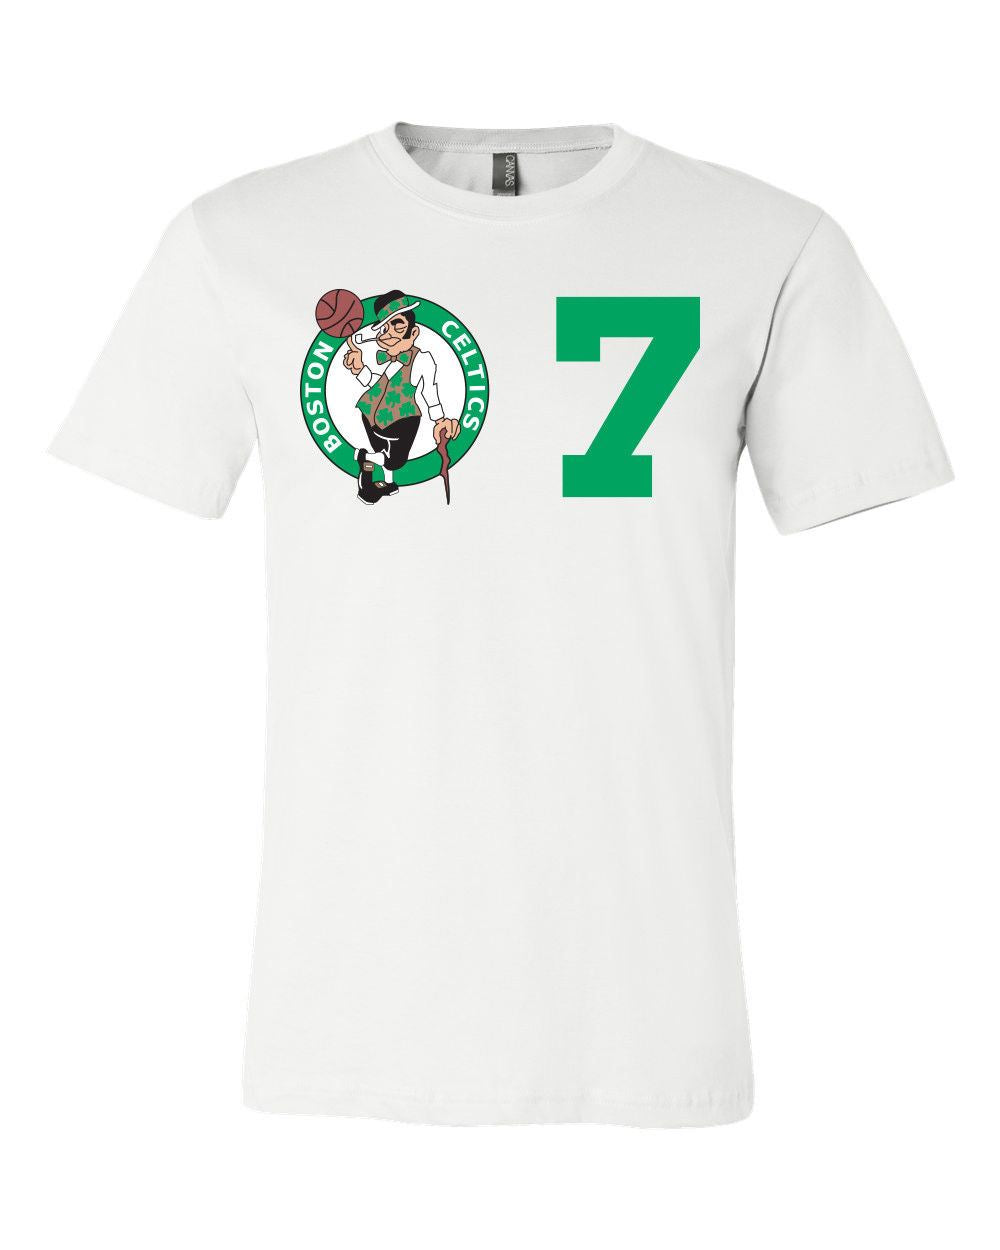 Boston Celtics, Celtics Gear, Boston Celtics Apparel, Boston Celtics Shop